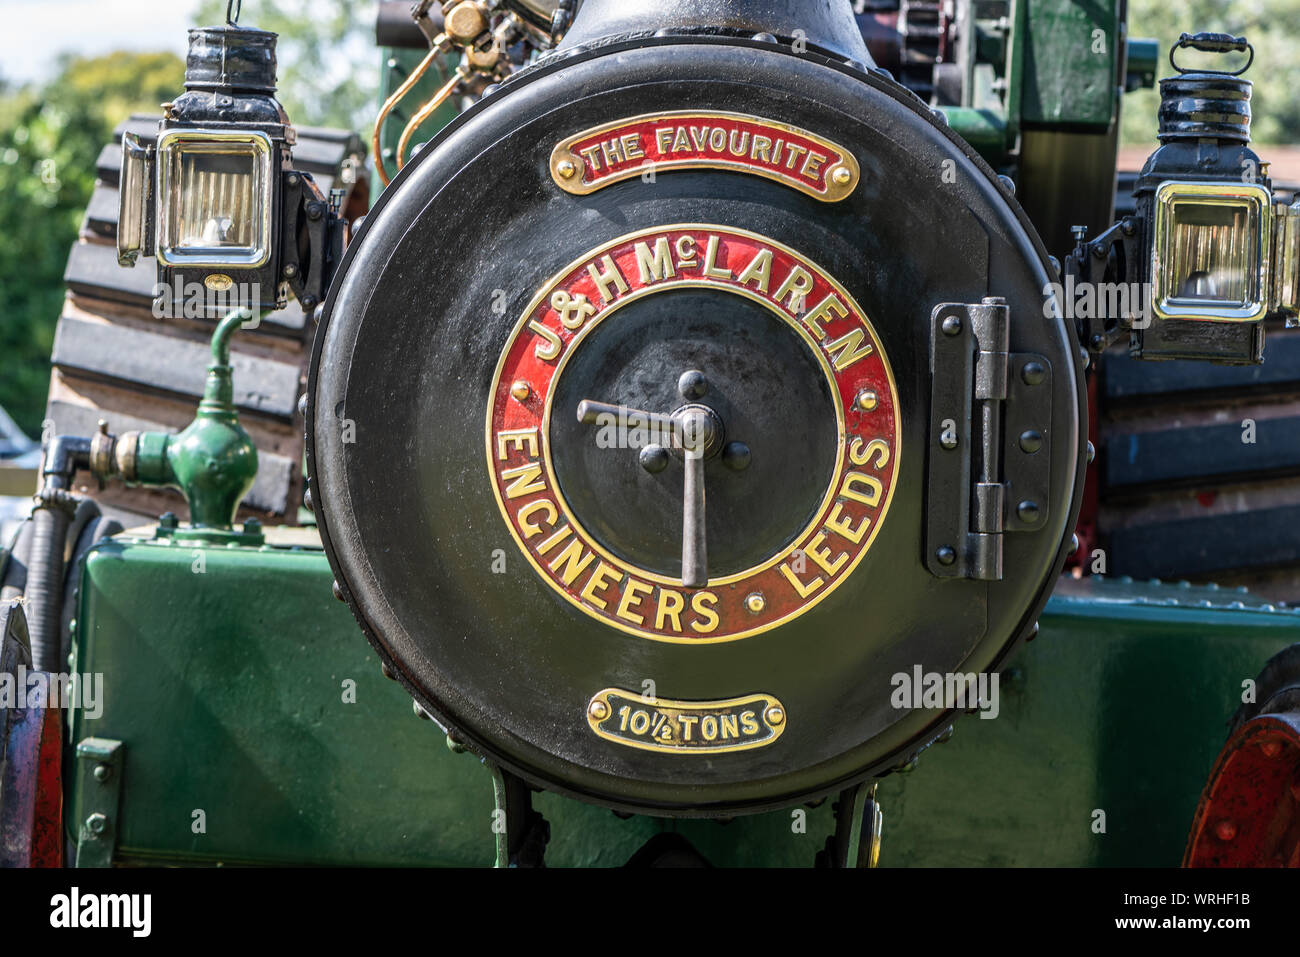 J & H McLaren steam engine at classic car show, Hinton Arms, Cheriton, Hampshire, UK Stock Photo